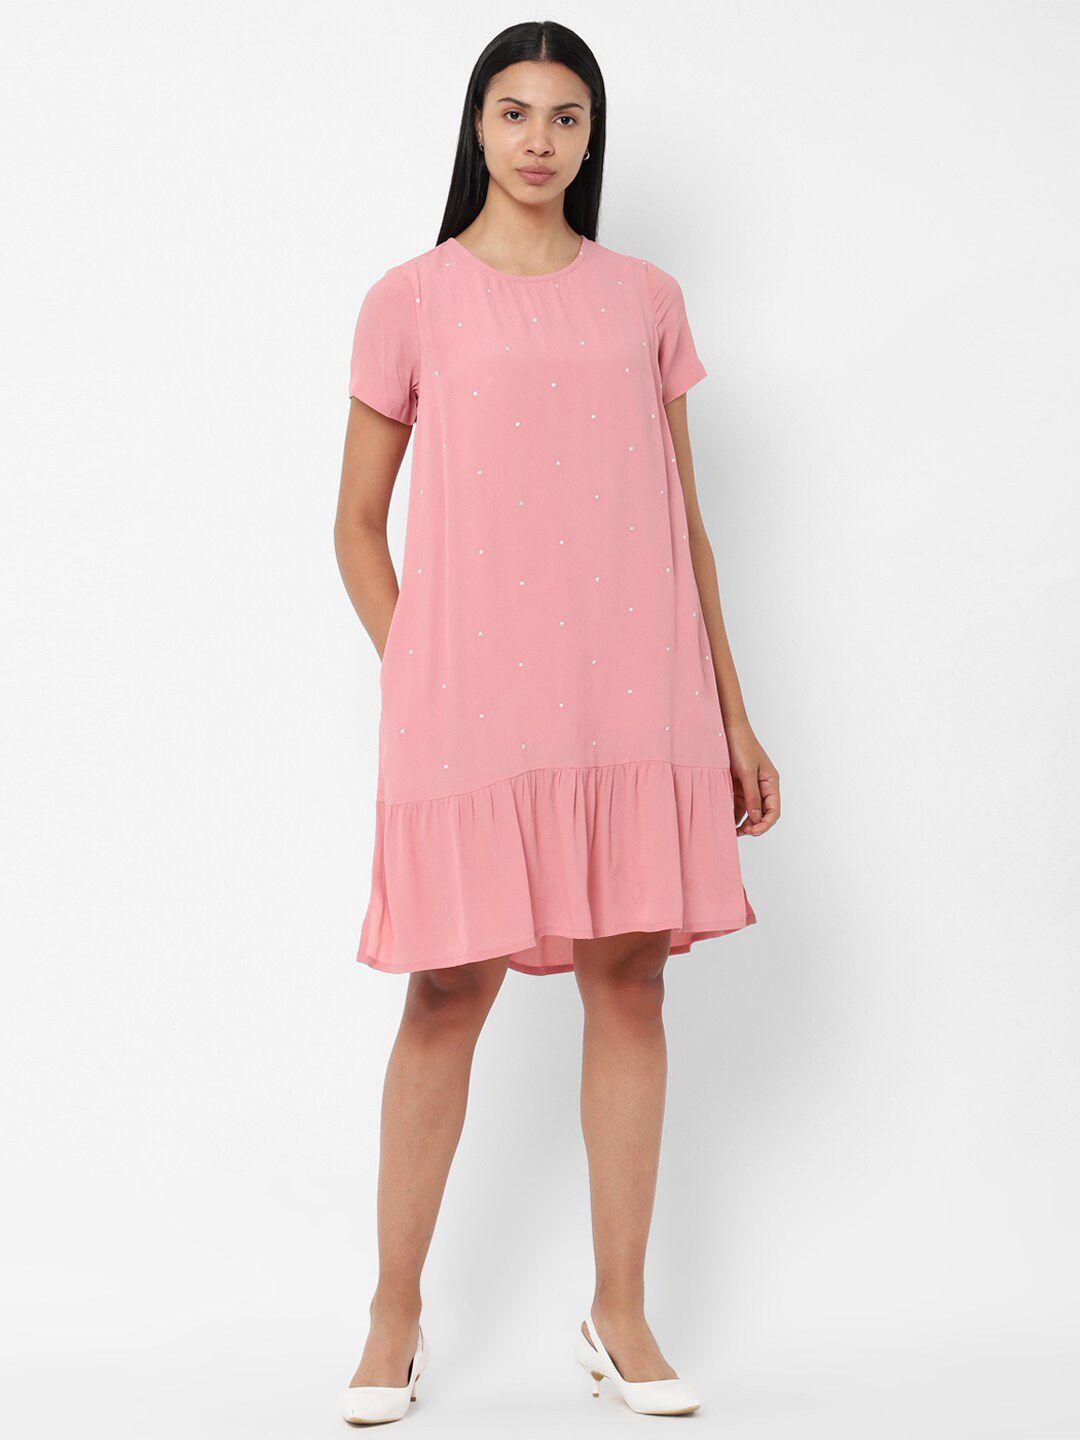 allen-solly-woman-pink-polka-dots-embroidered-drop-waist-dress